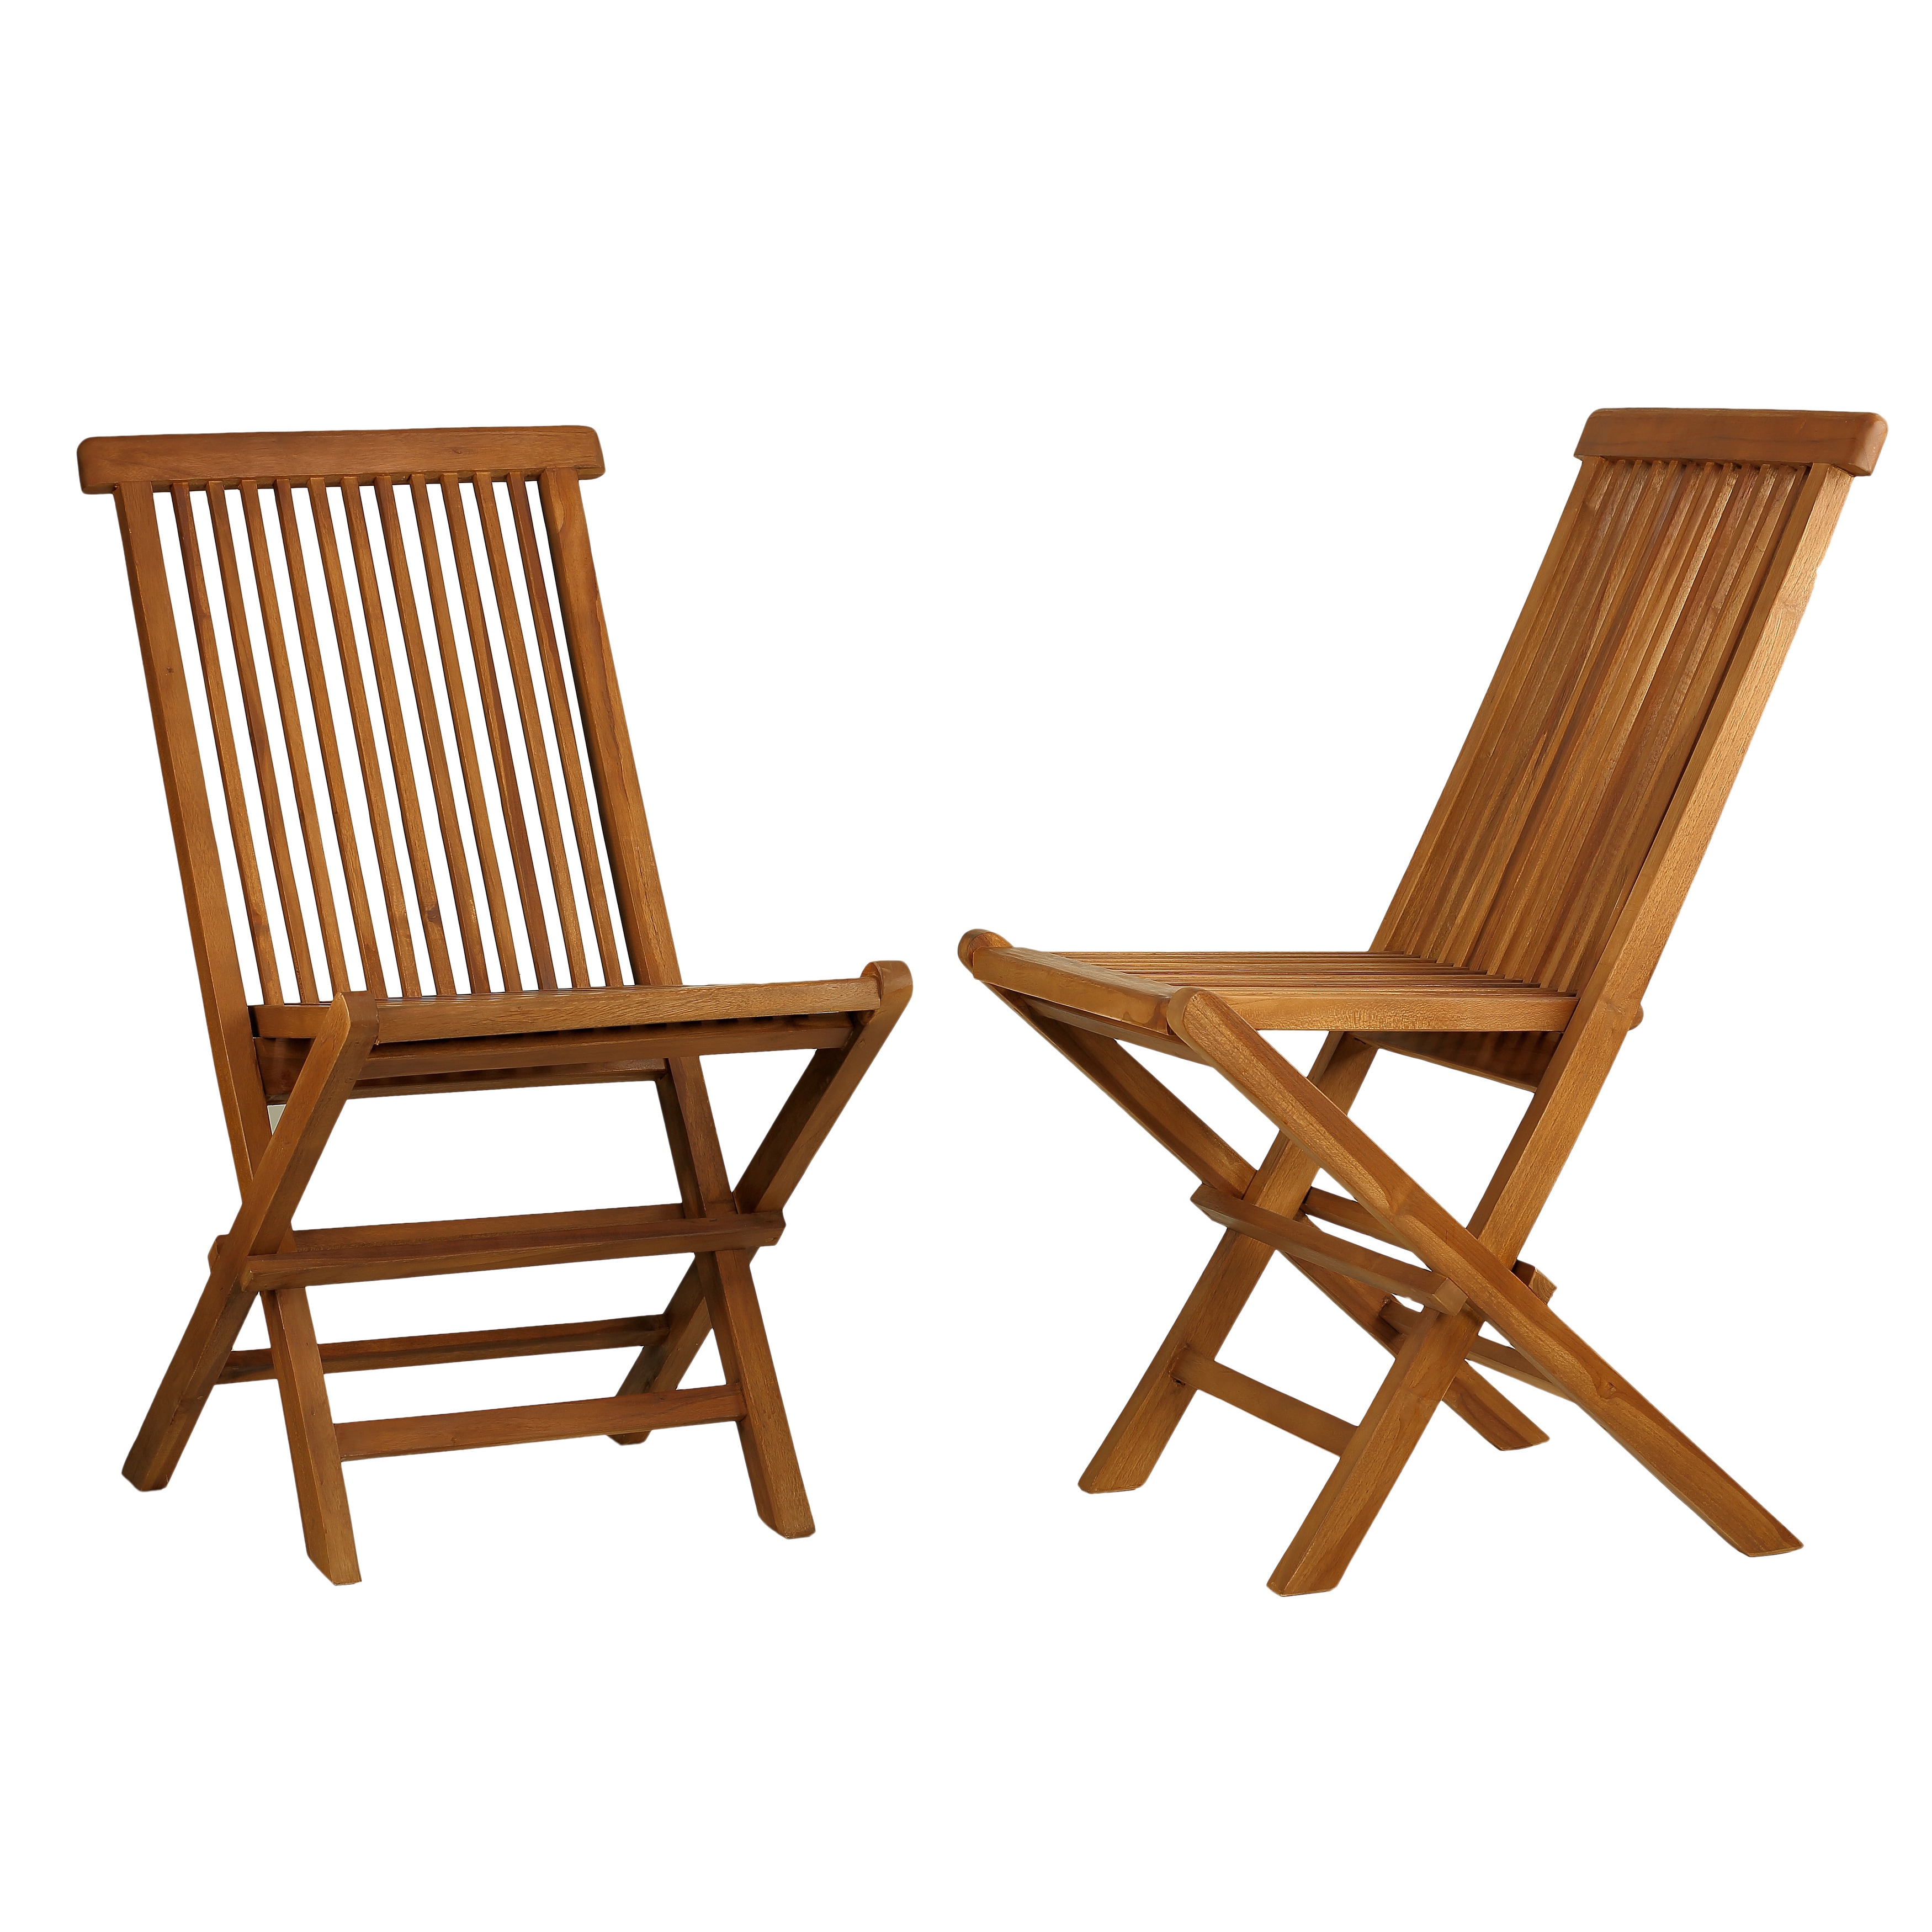 Bare Decor  Vega Golden Teak Wood Outdoor Folding Chair (Set of 2) - image 2 of 4